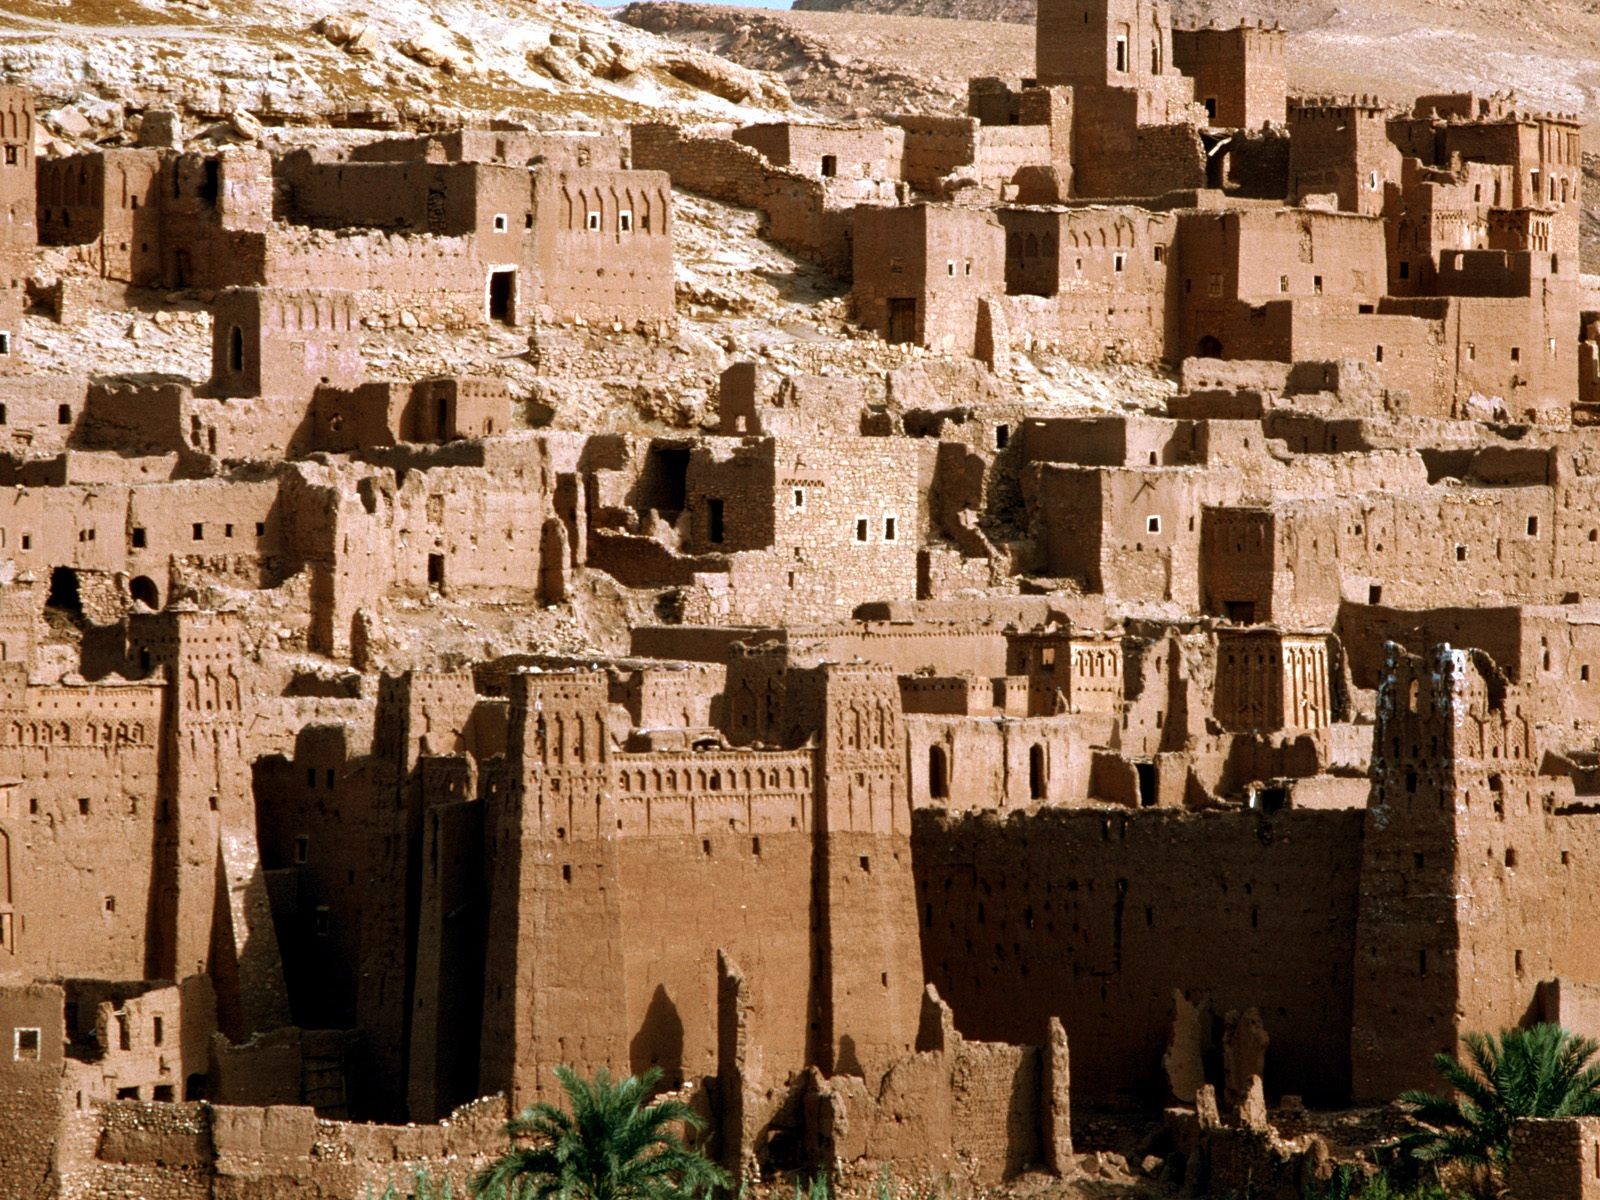 General 1600x1200 Morocco village fort ruins old building